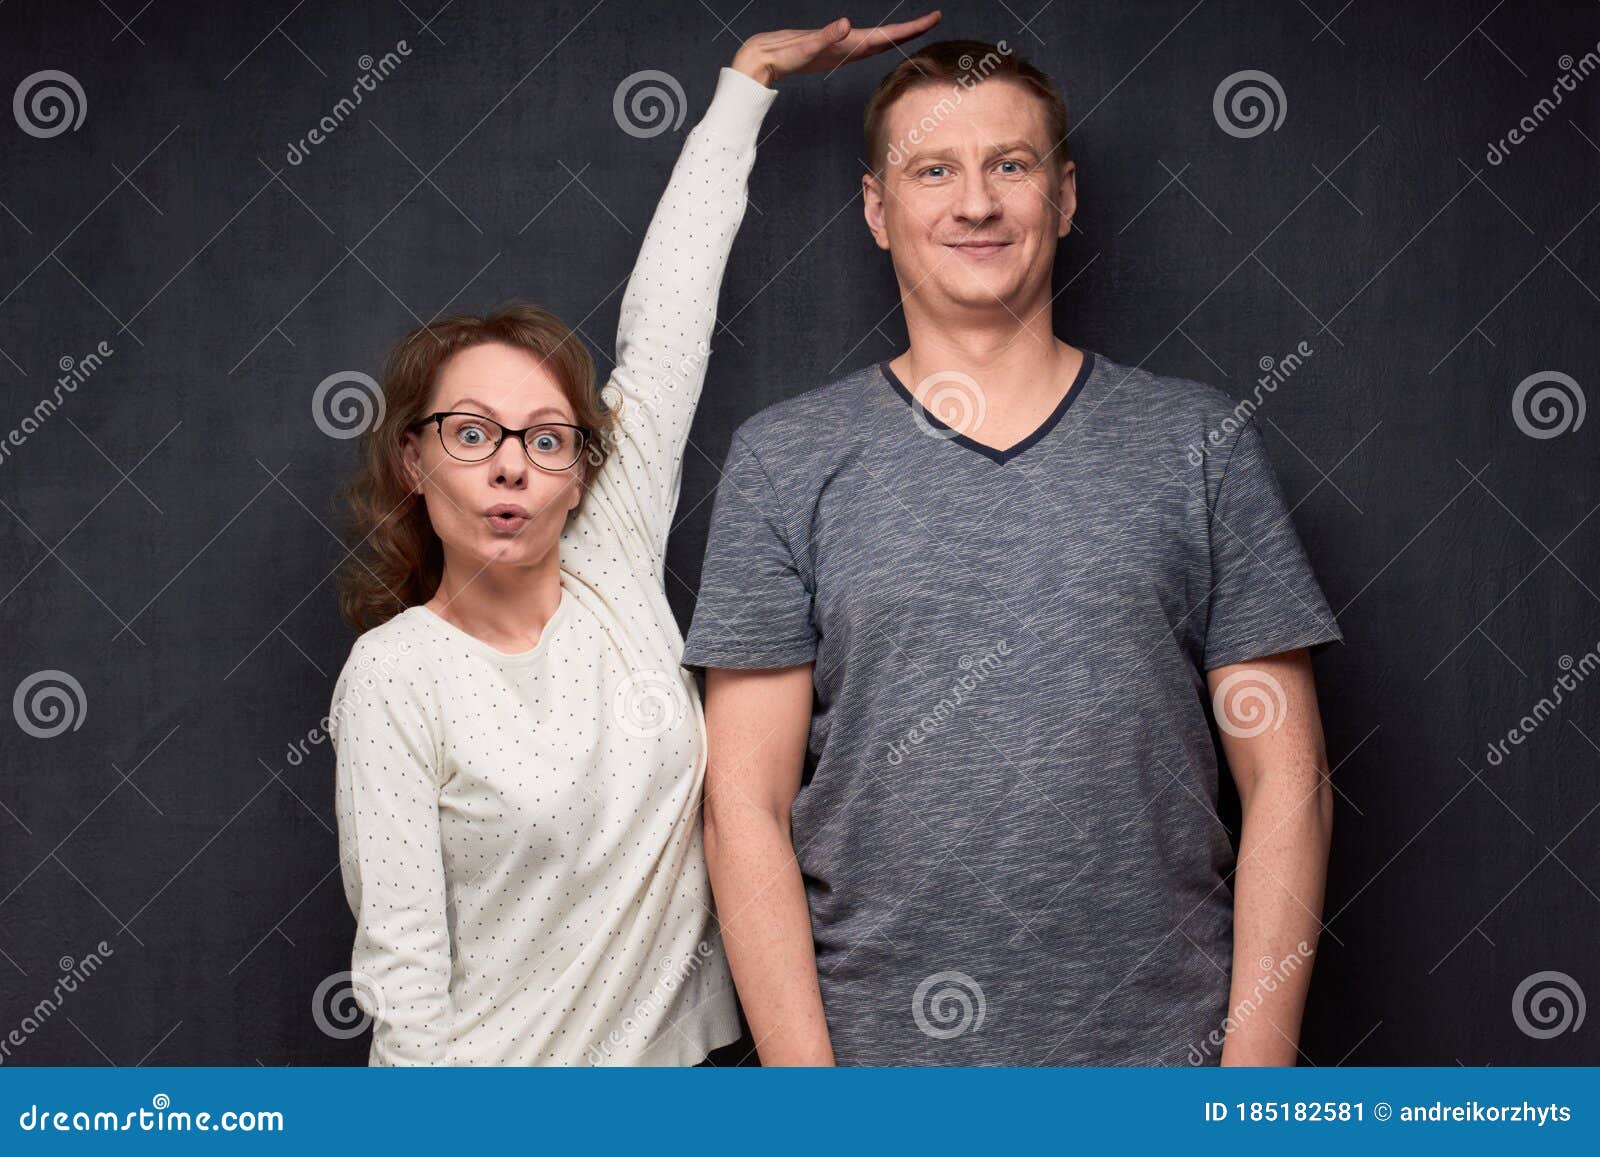 shot of funny short woman and tall man